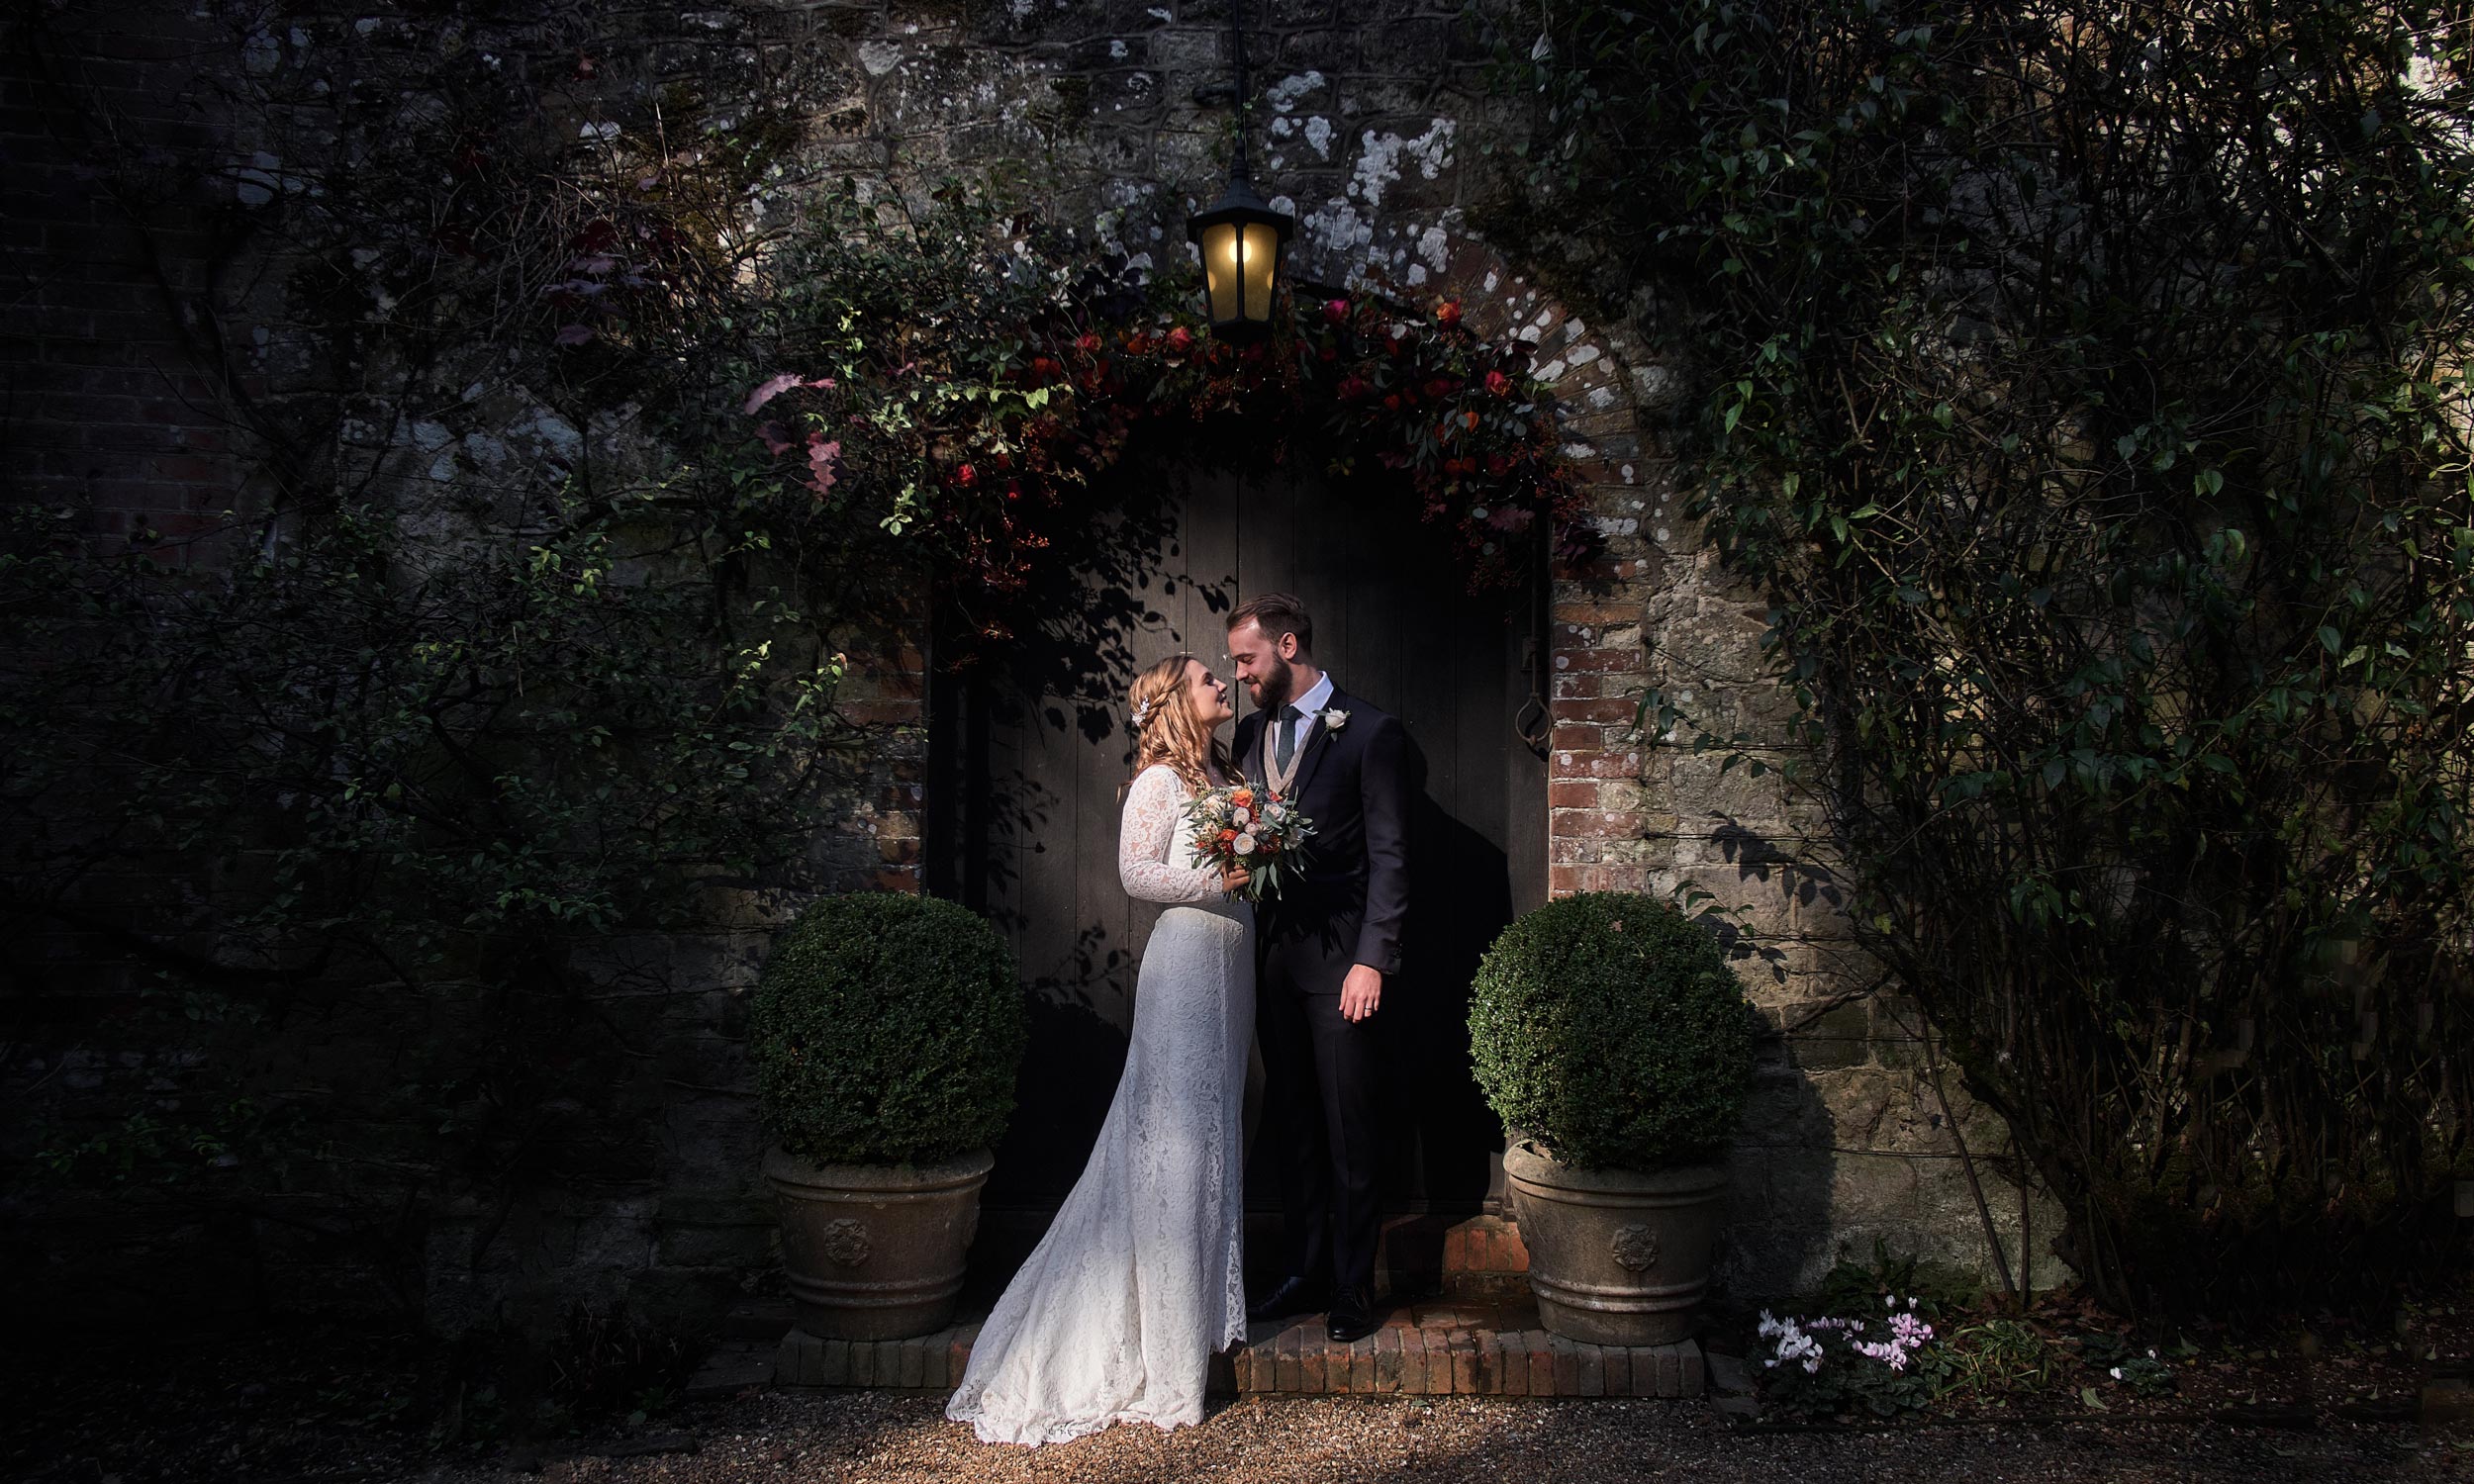 Ramster Hall Wedding Photographer based in Surrey